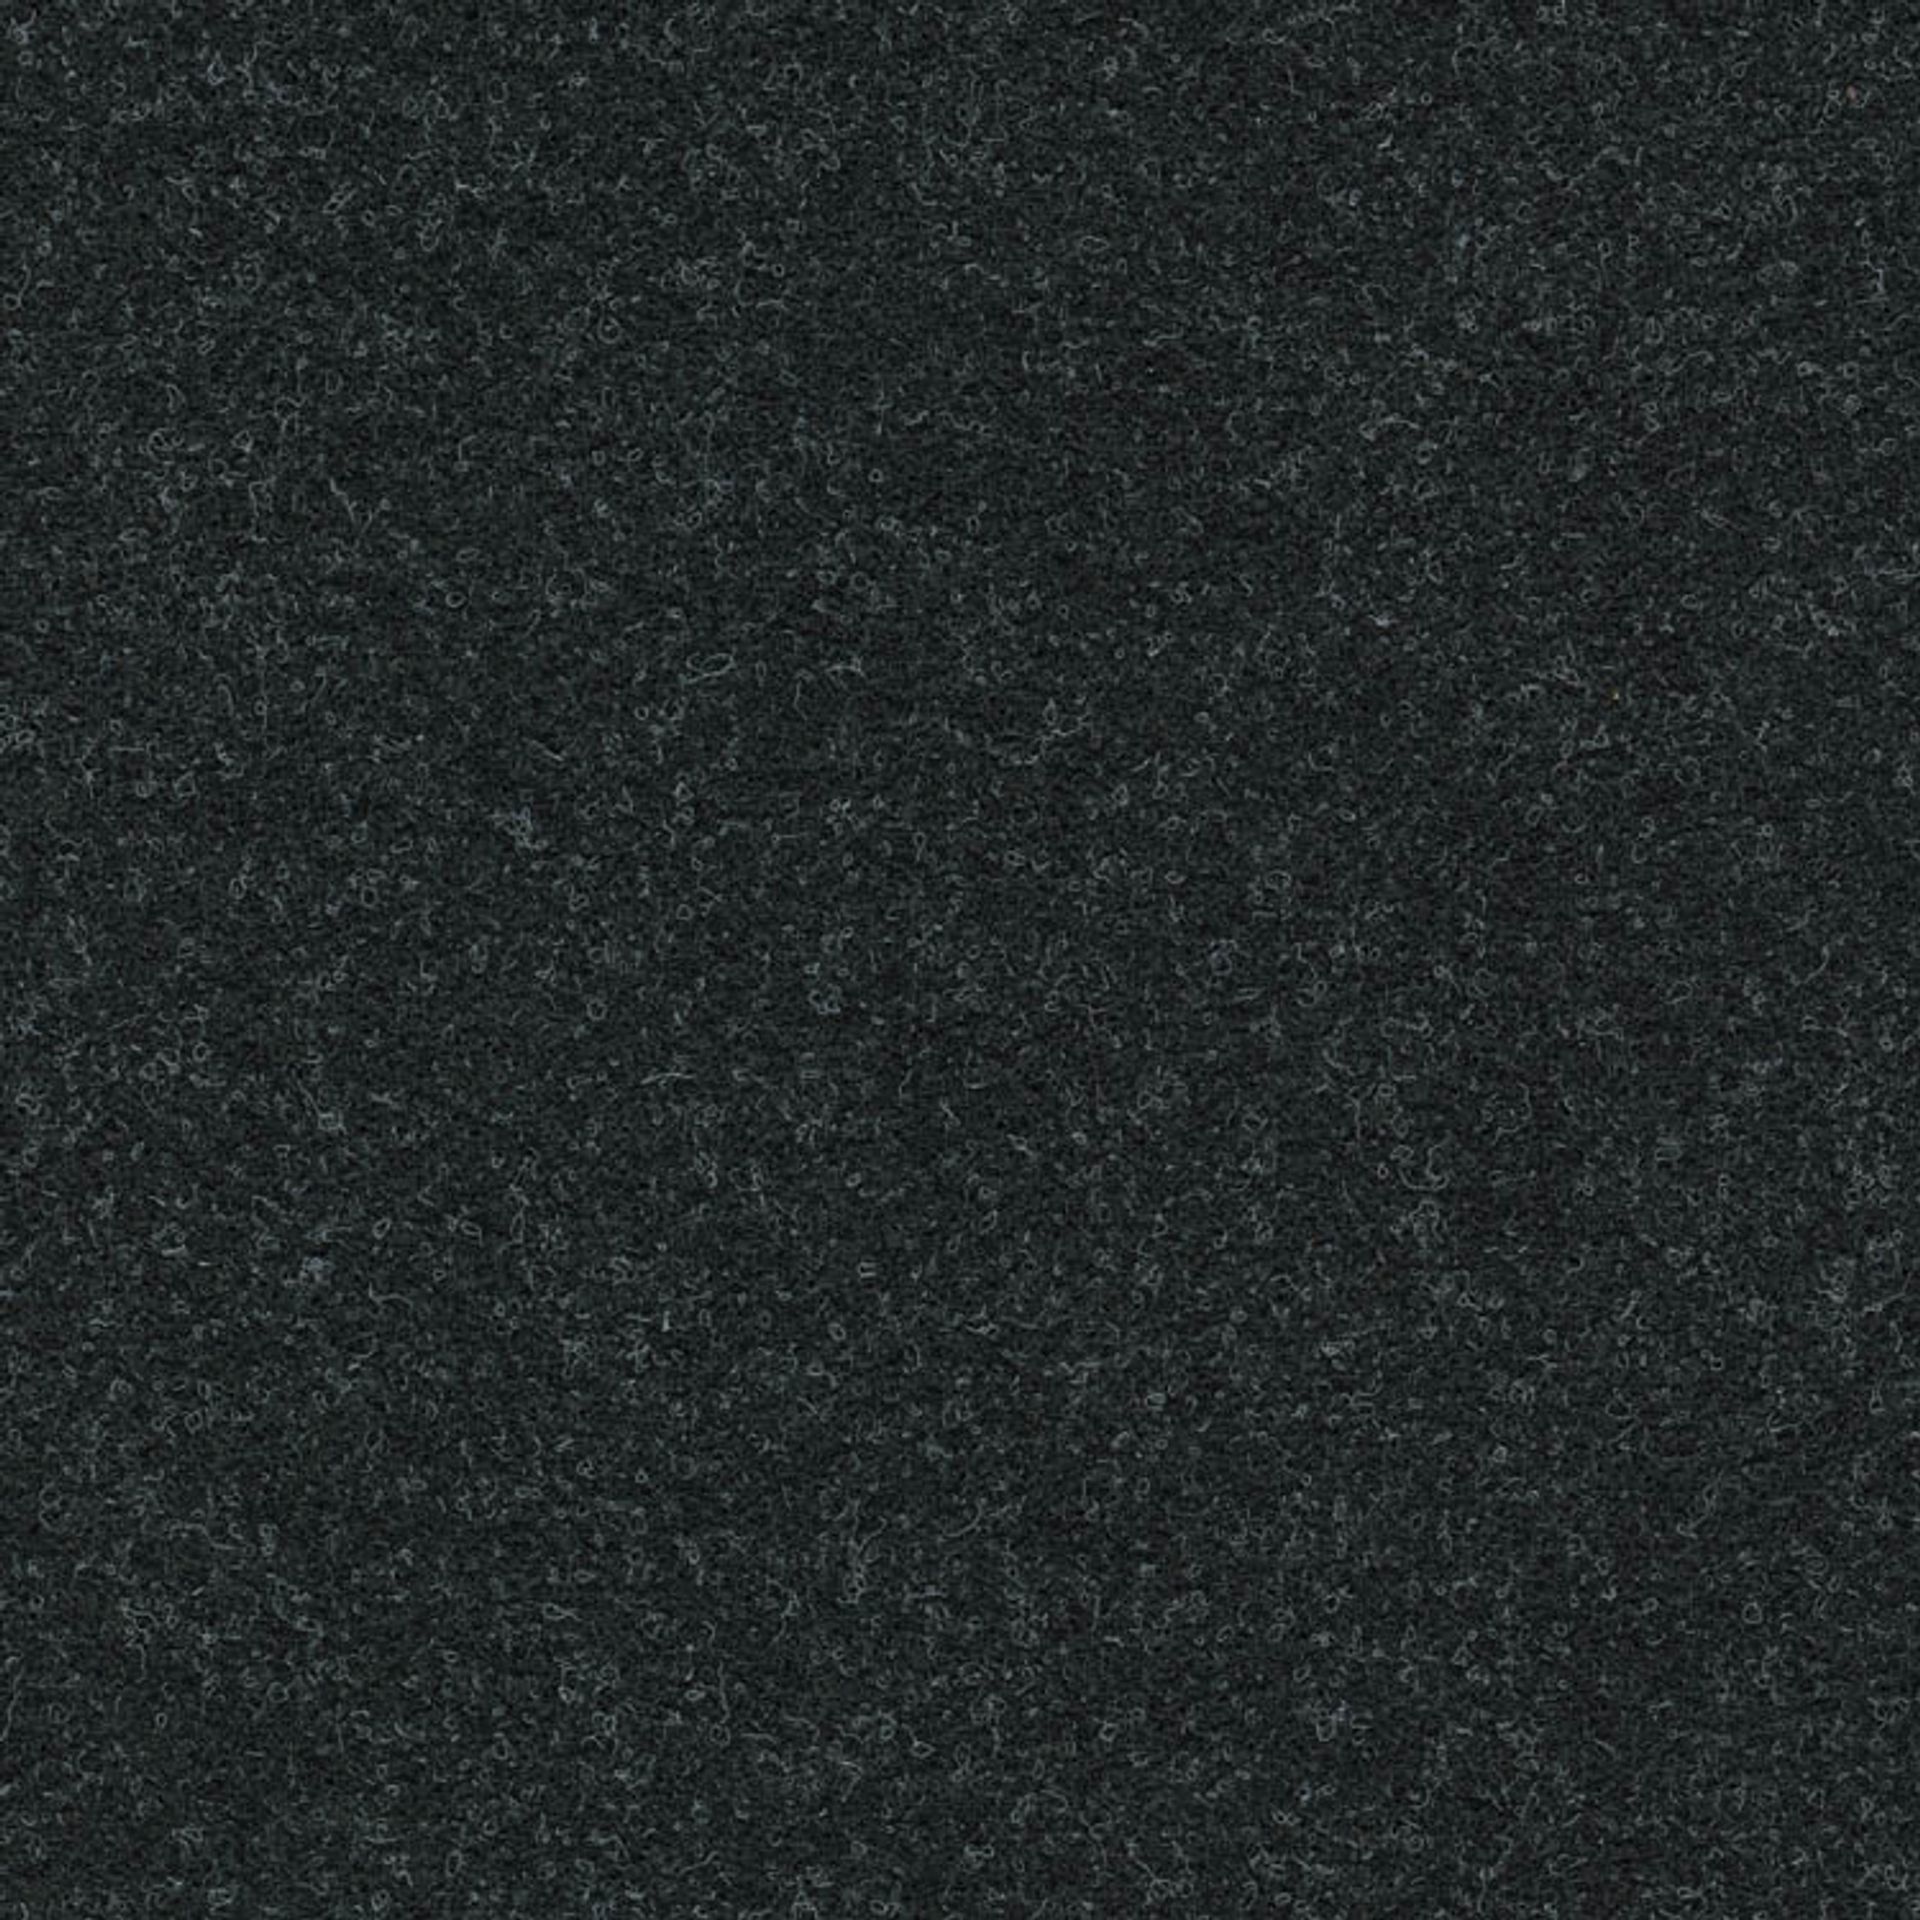 Teppichboden Nadelvlies FINETT VISION classic 980147 - Rollenbreite 200 cm